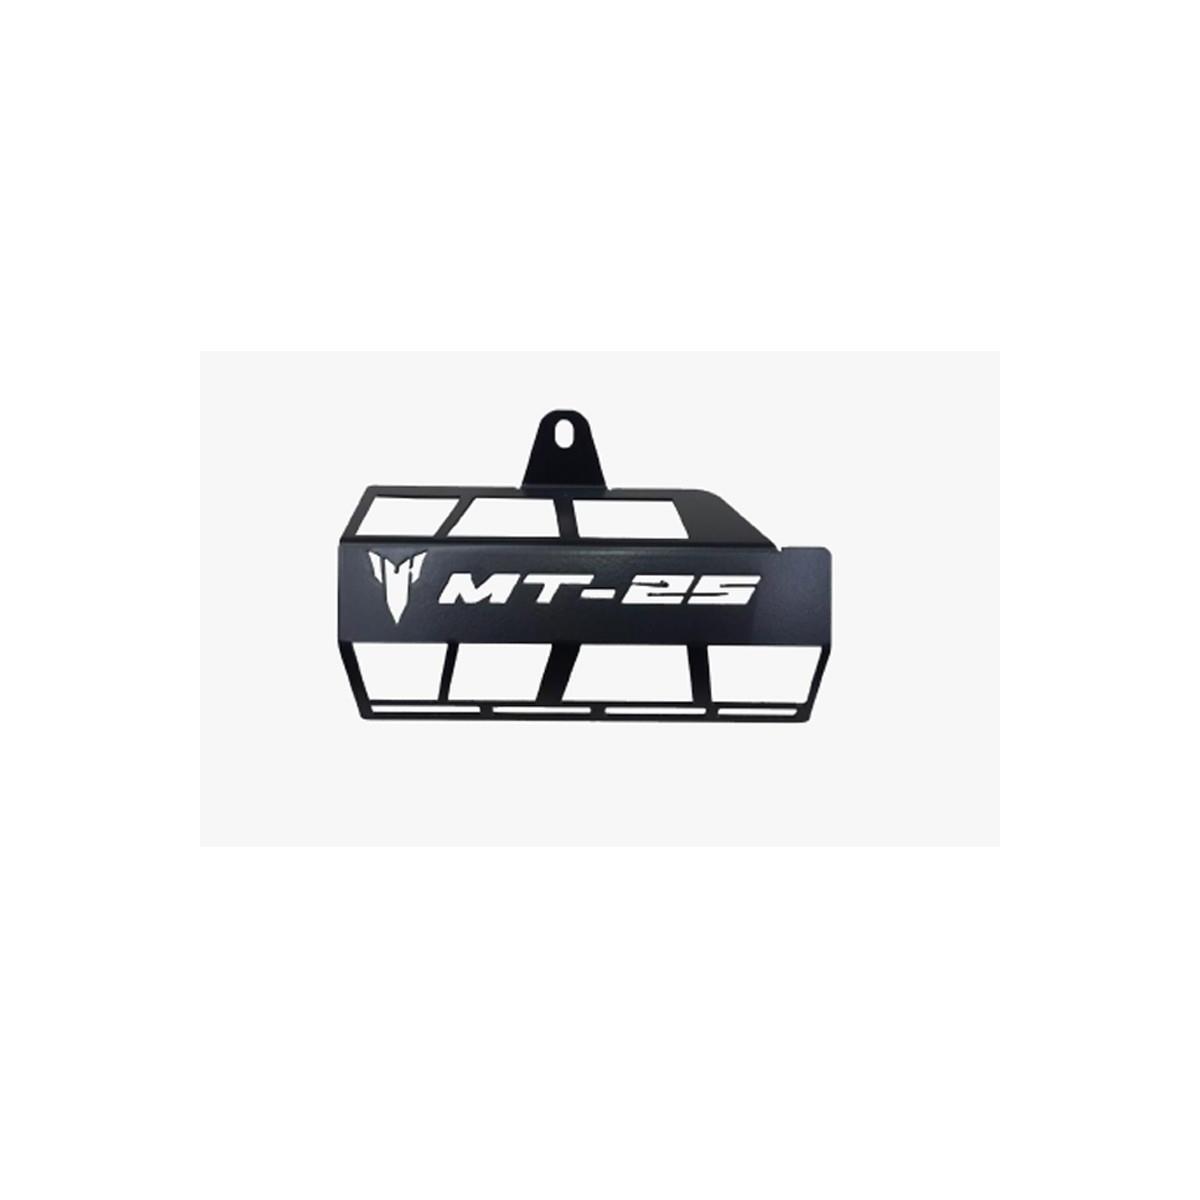 Yamaha Yamaha Mt-25 2014 - 2021 Uyumlu Eksoz Koruma Demiri